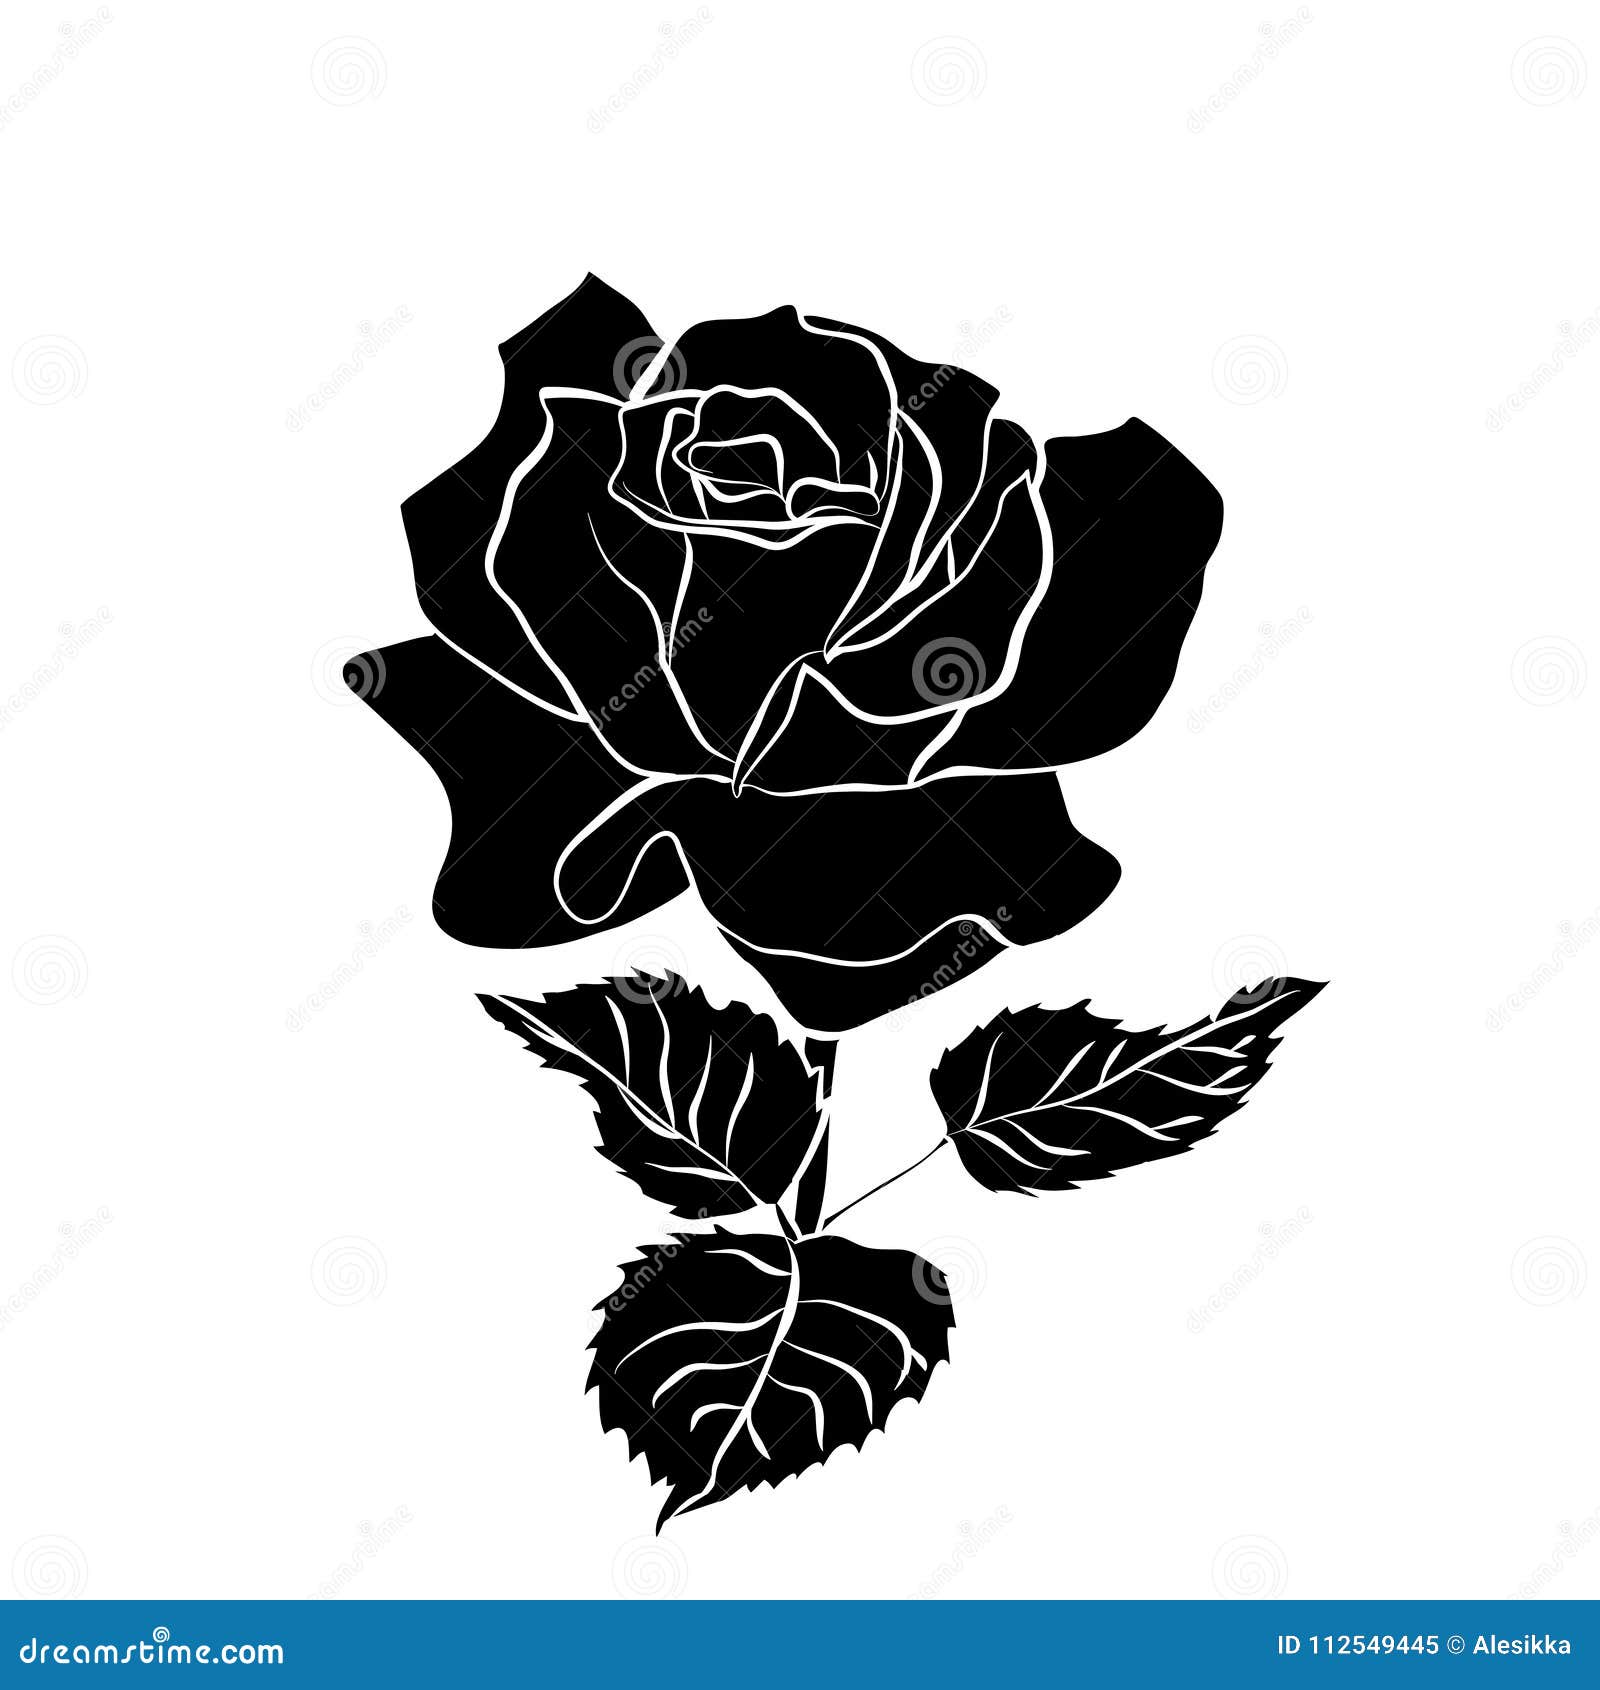 Silhouette of rose stock vector. Illustration of gift - 112549445